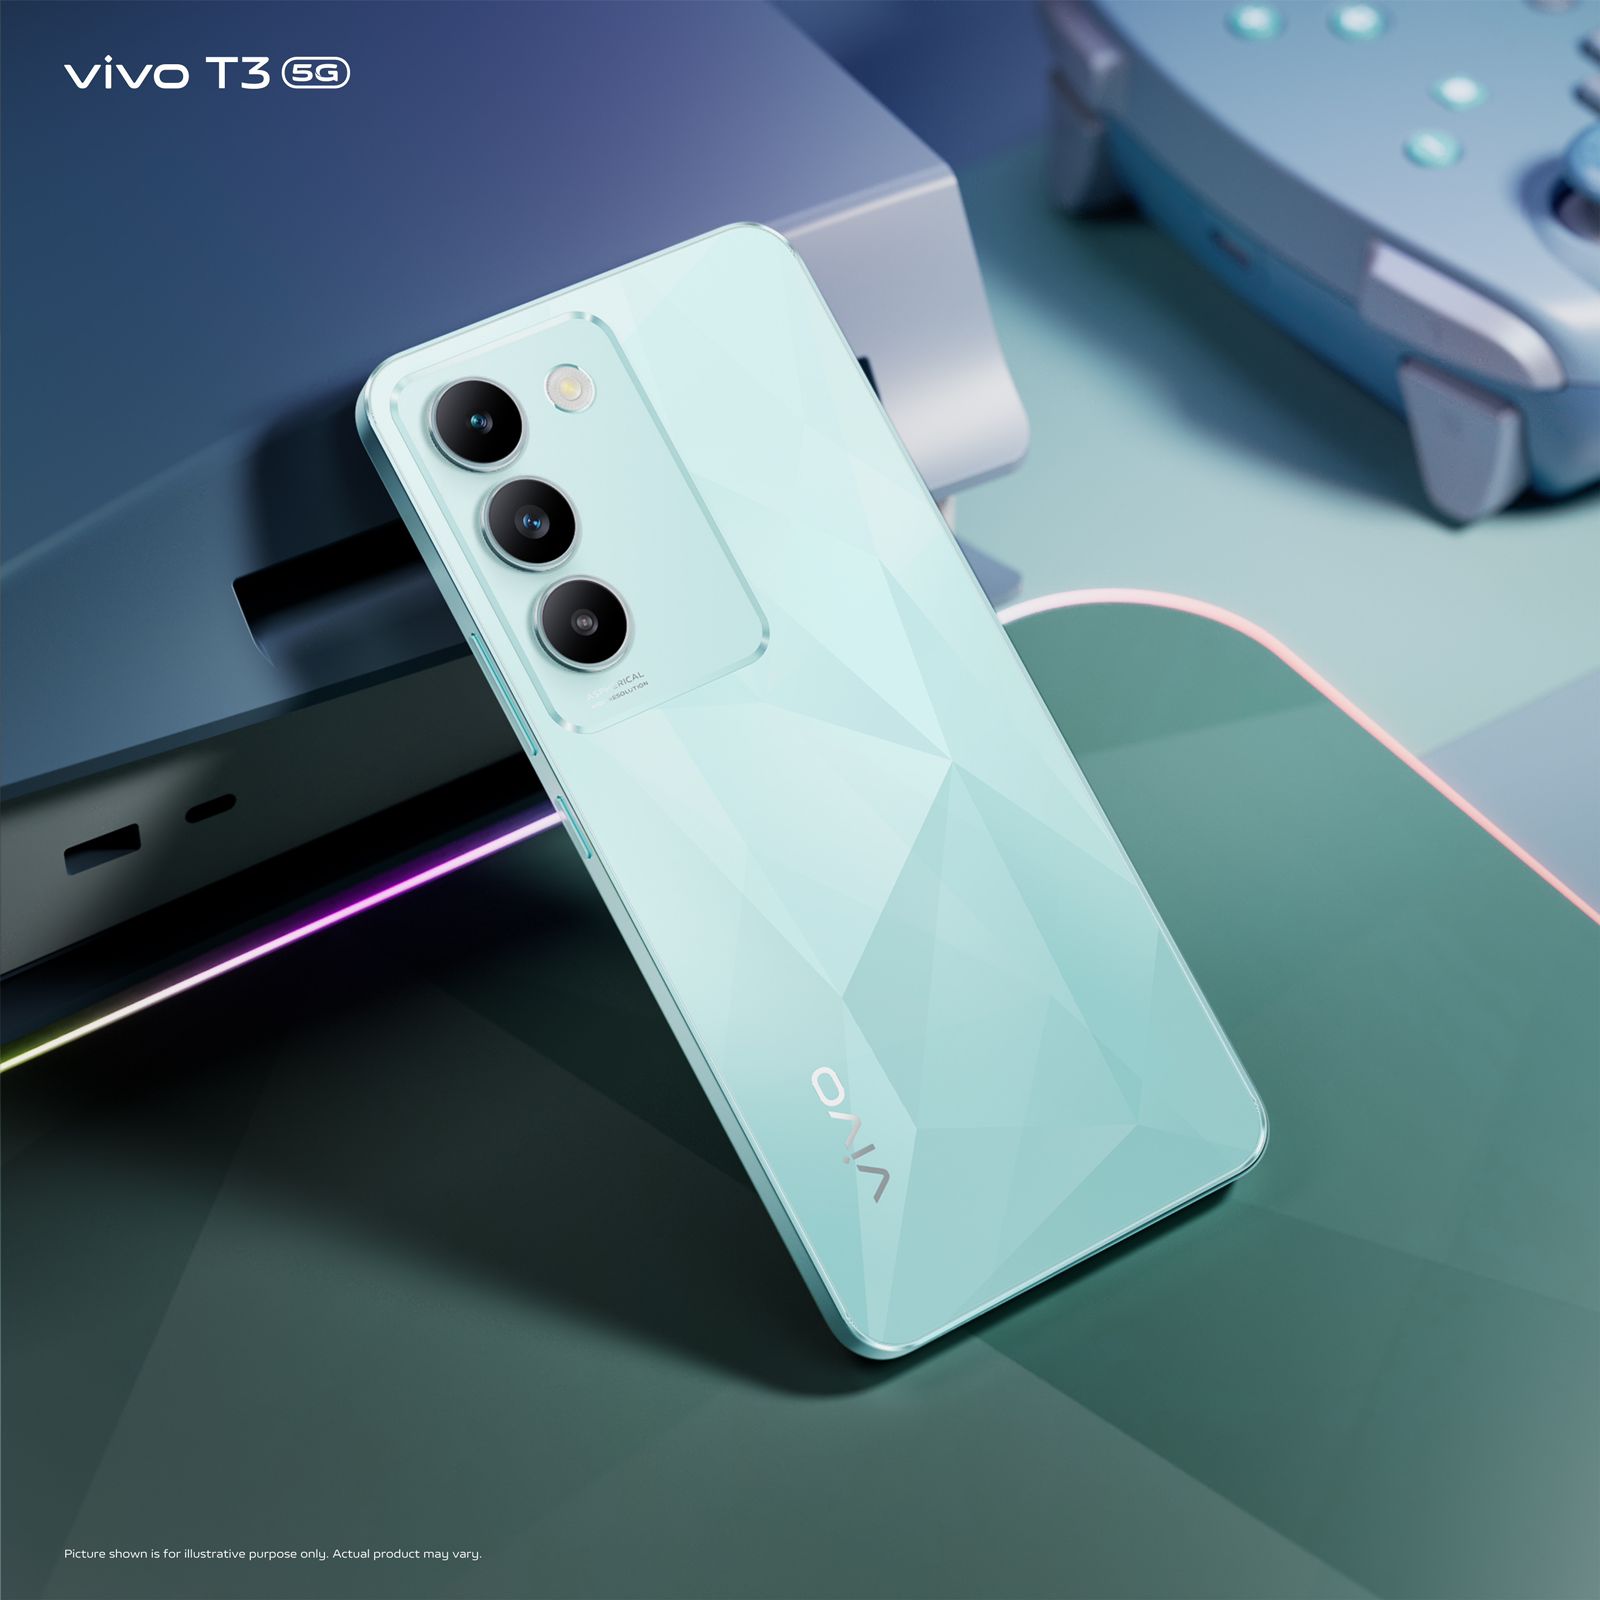 Key Specifications of Vivo T3 5G